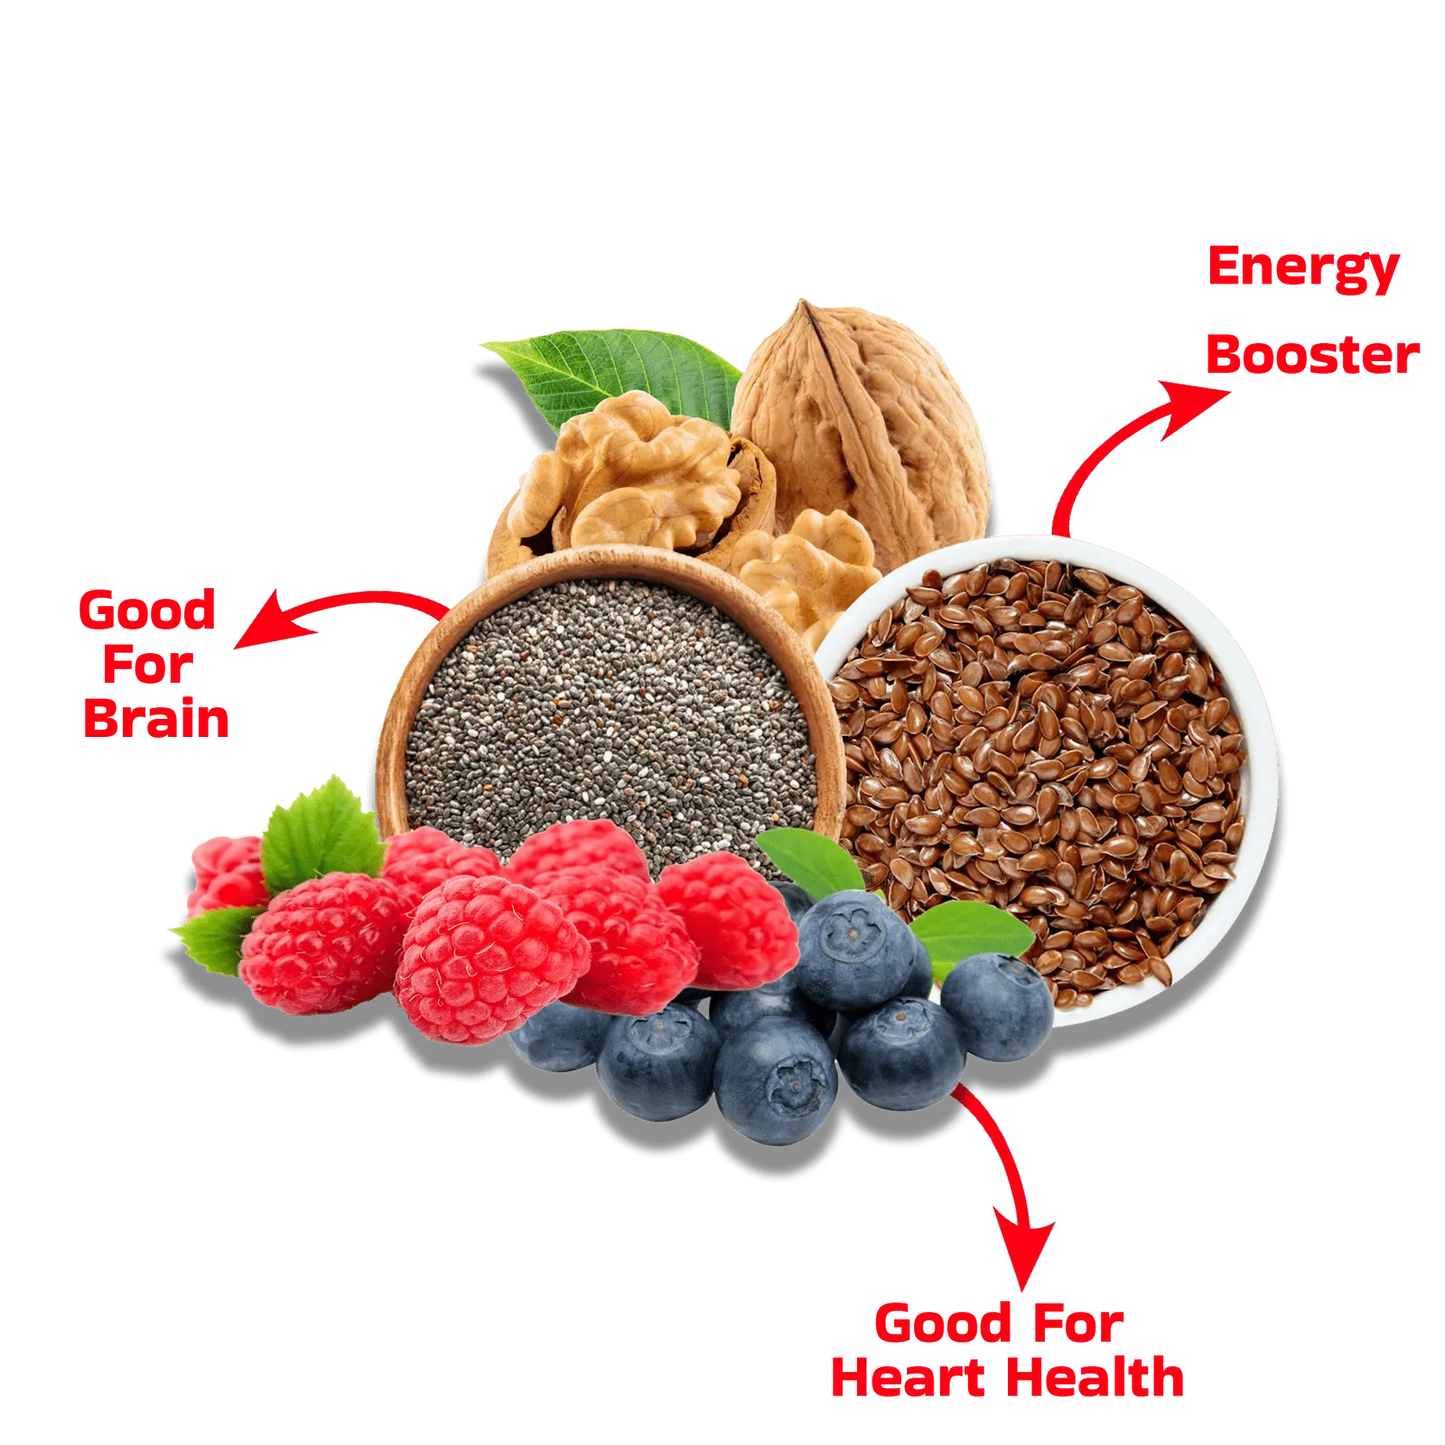 Nuts & Berry Mix Zipper, Dry-Fruit, Trail & Snack Mixes, MevaBite